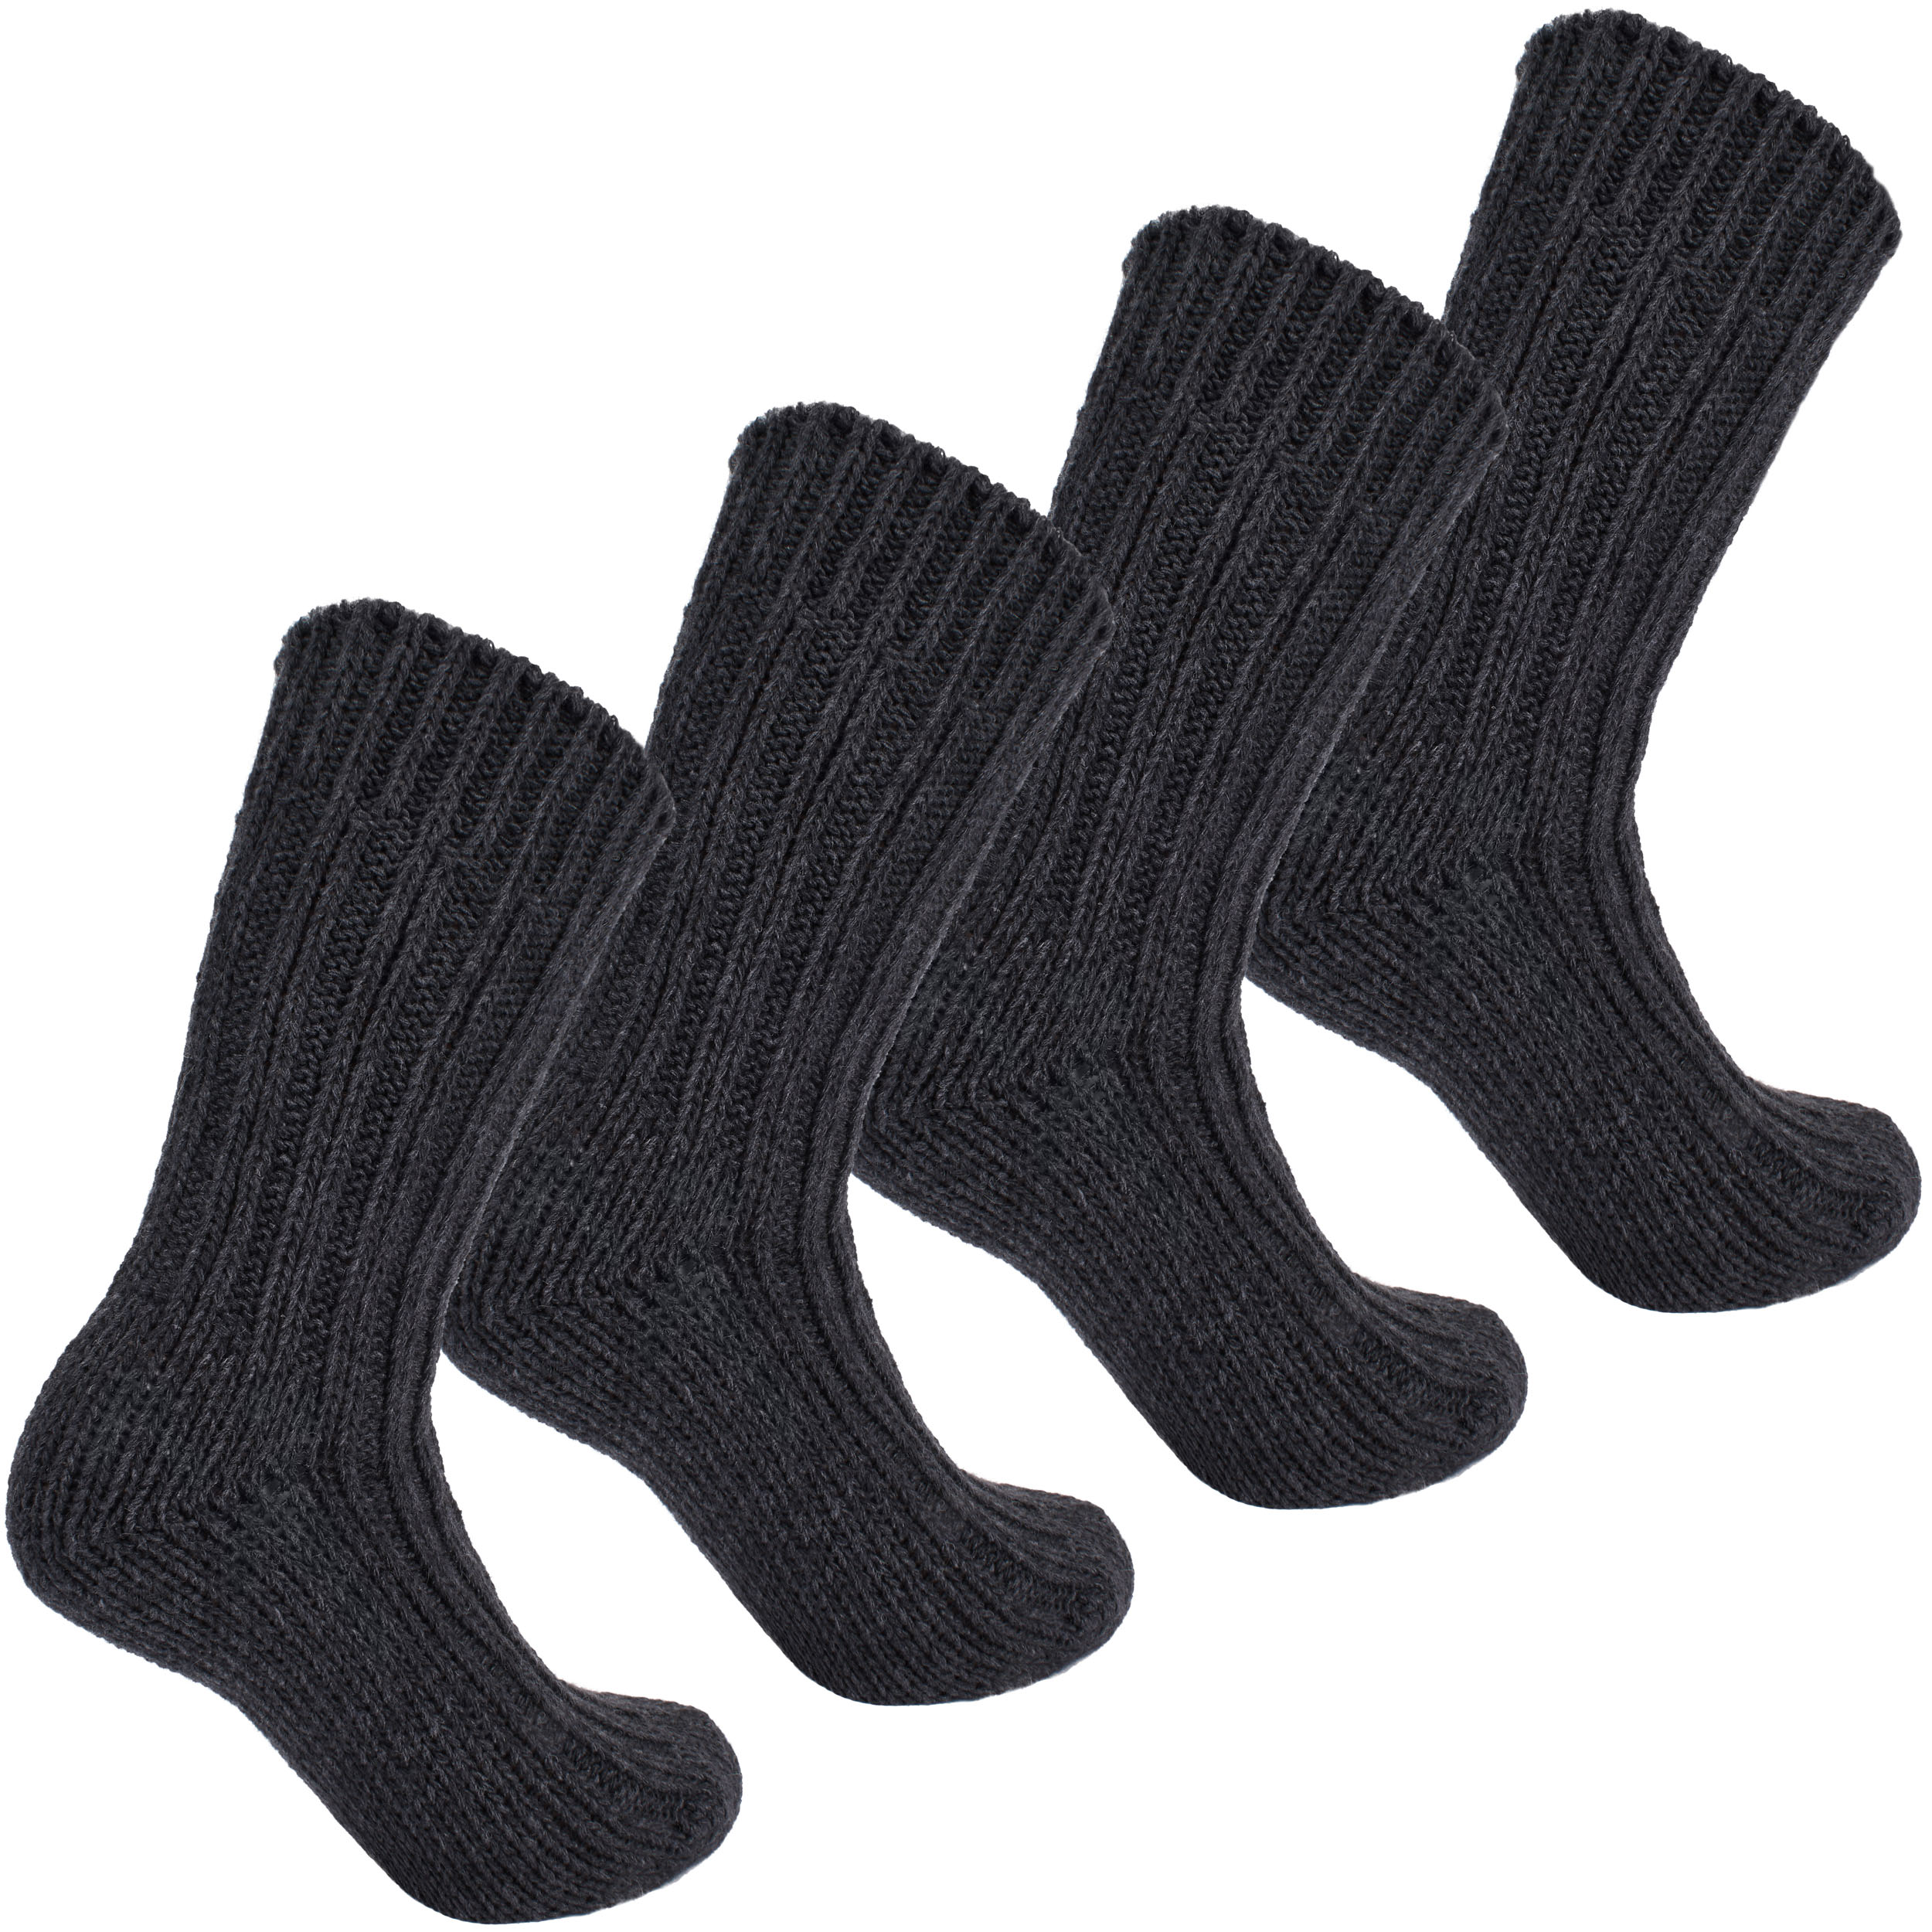 2 Paar Wollsocken Wintersocken Herren Damen Socken mit Schafswolle Stricksocken